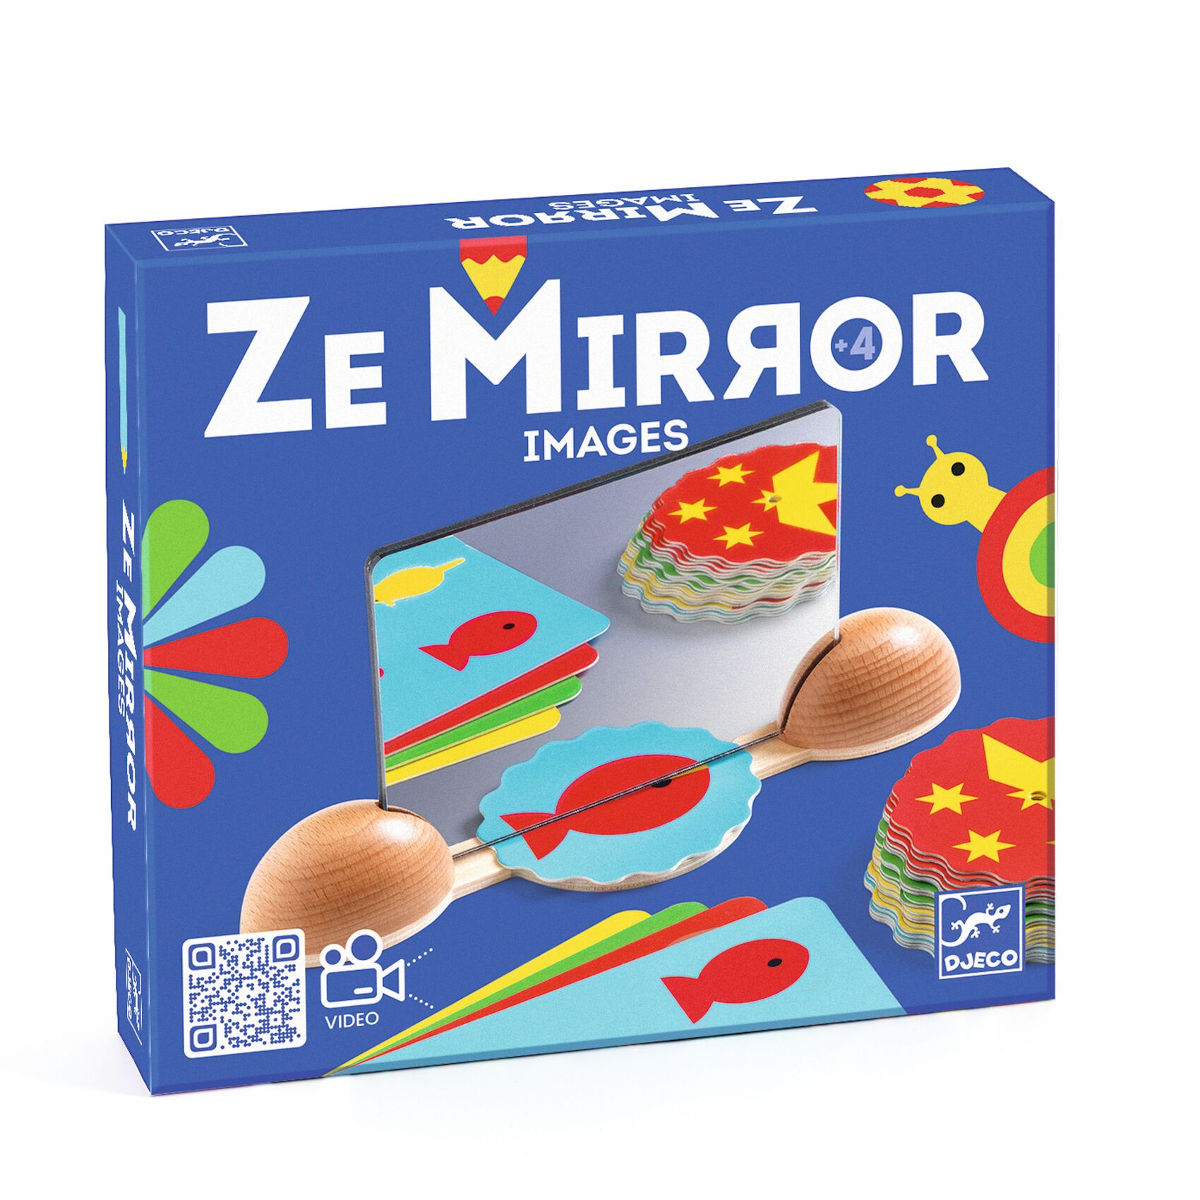 Ze Mirror Images - Immagini Riflesse - Djeco